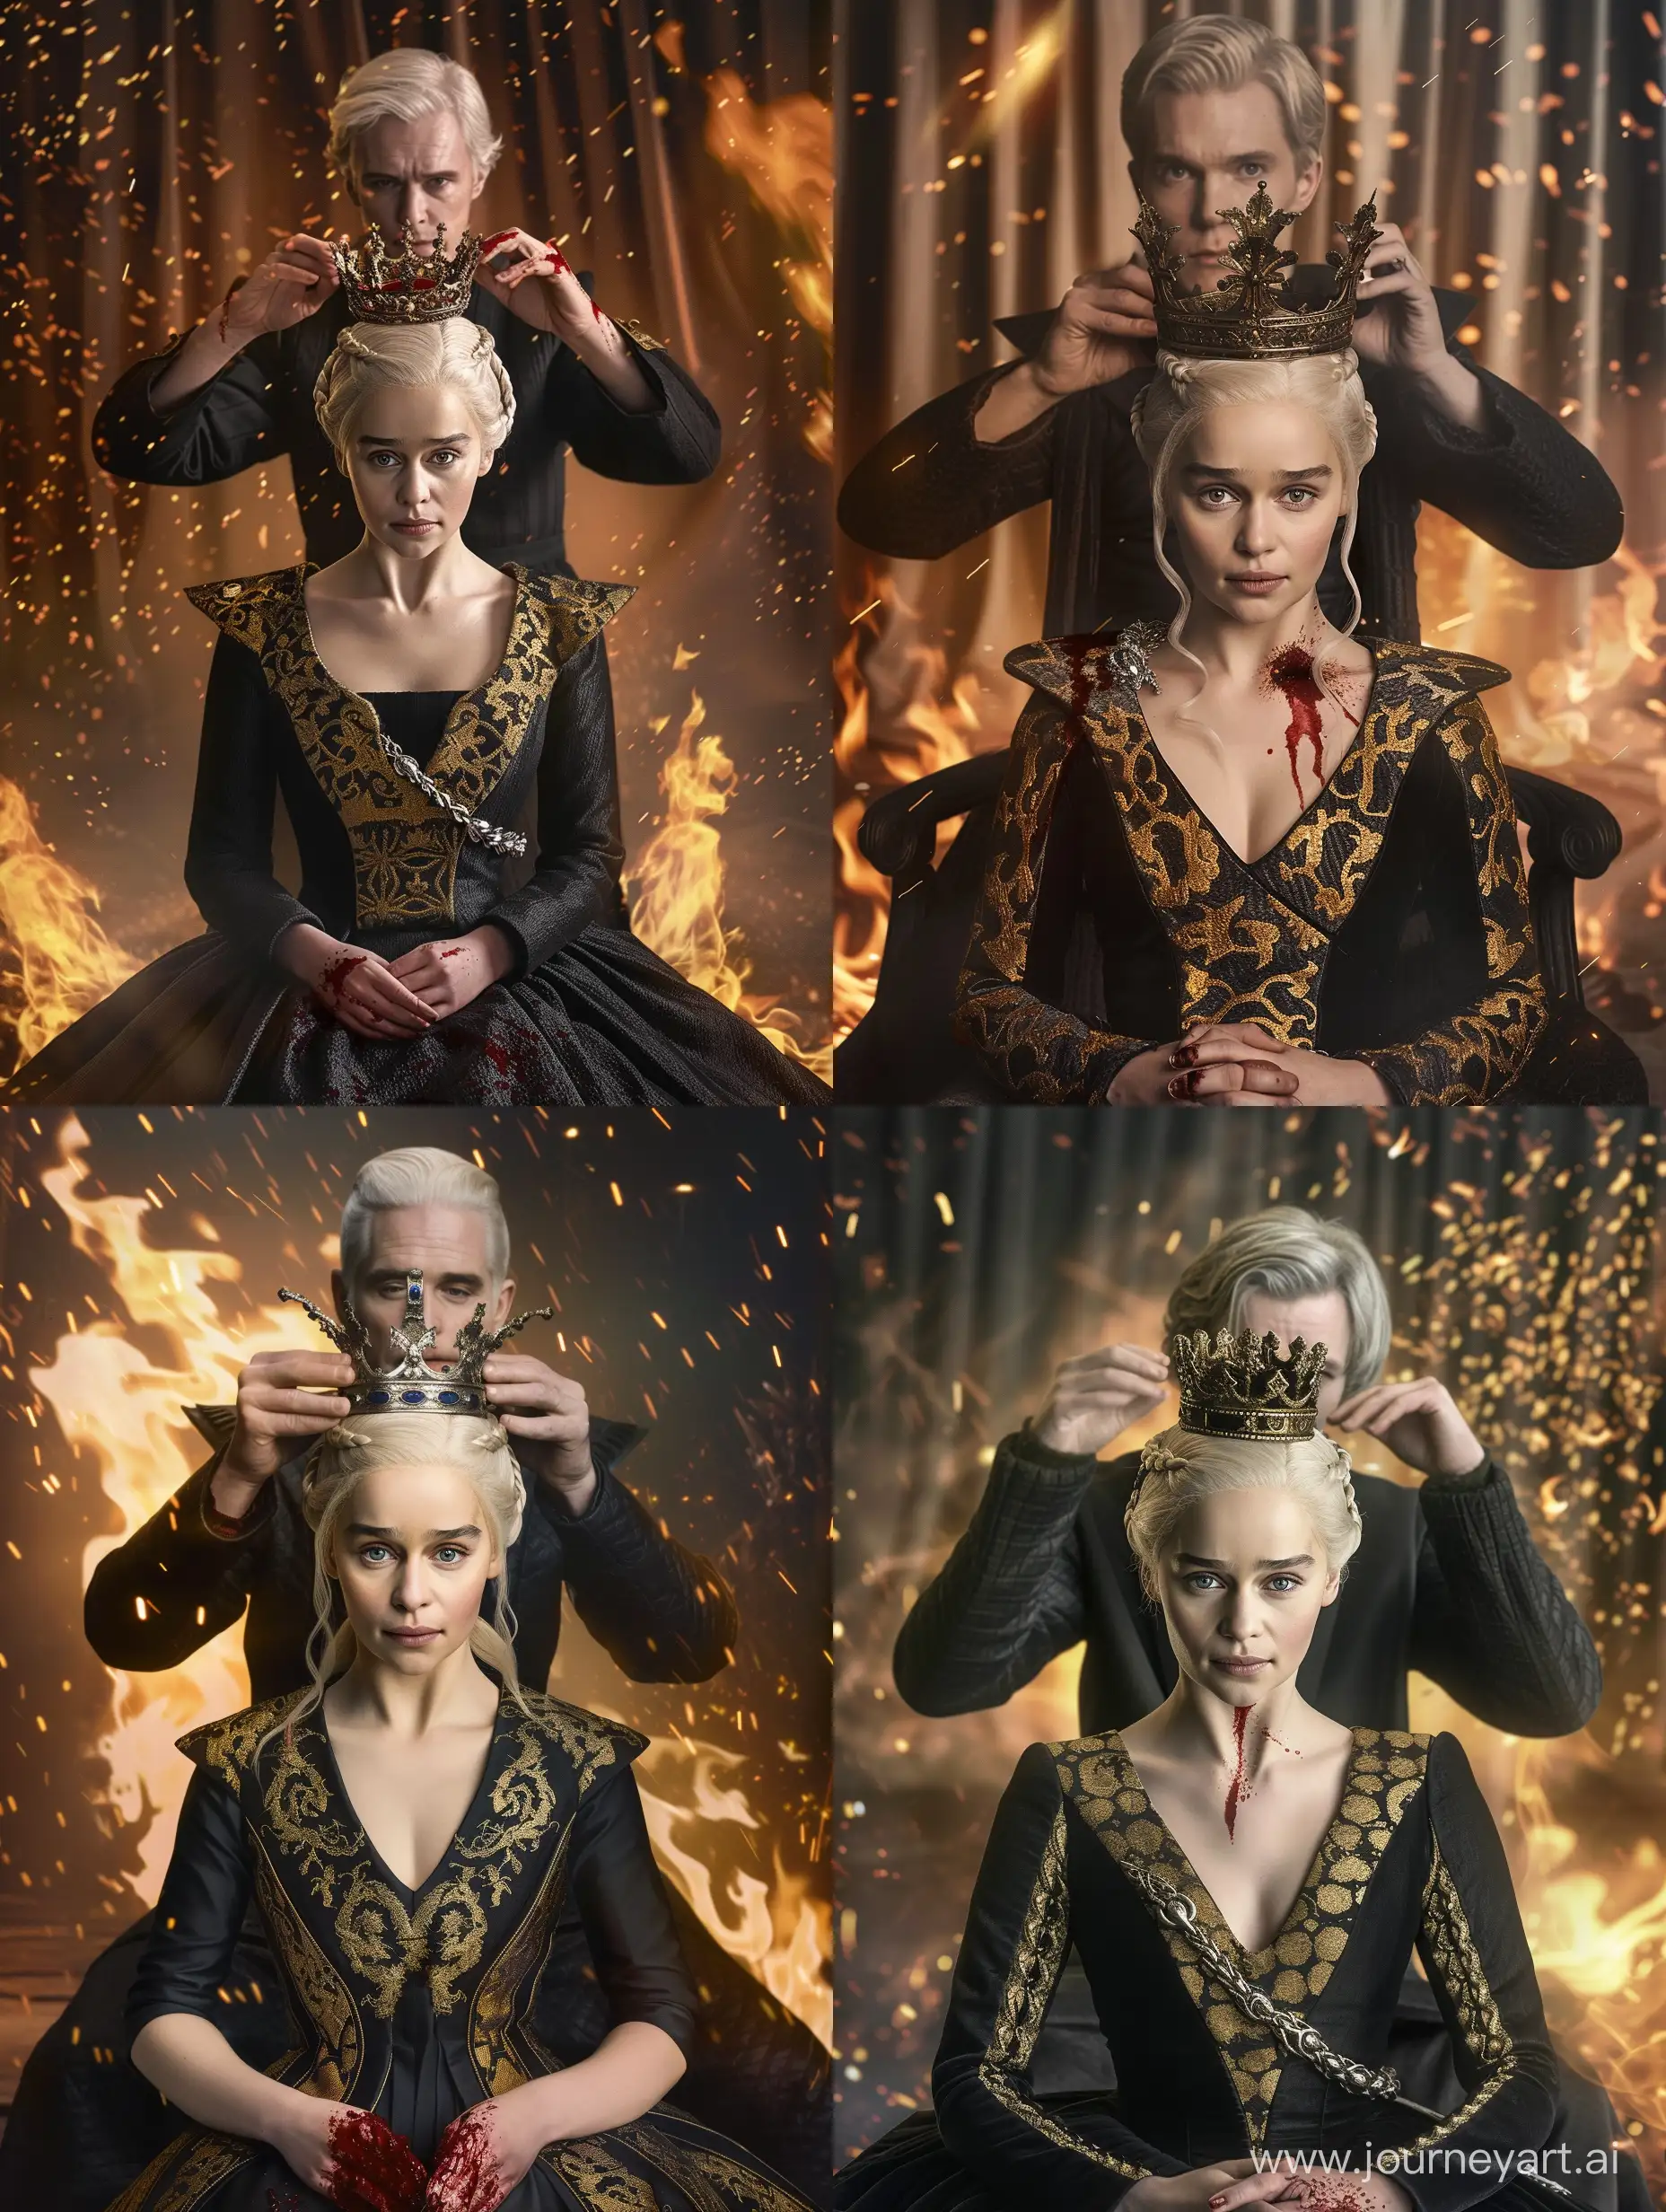 Targaryen-Woman-Receives-Fiery-Crown-from-Regal-Figure-in-Game-of-Thrones-Style-Cinematic-Scene